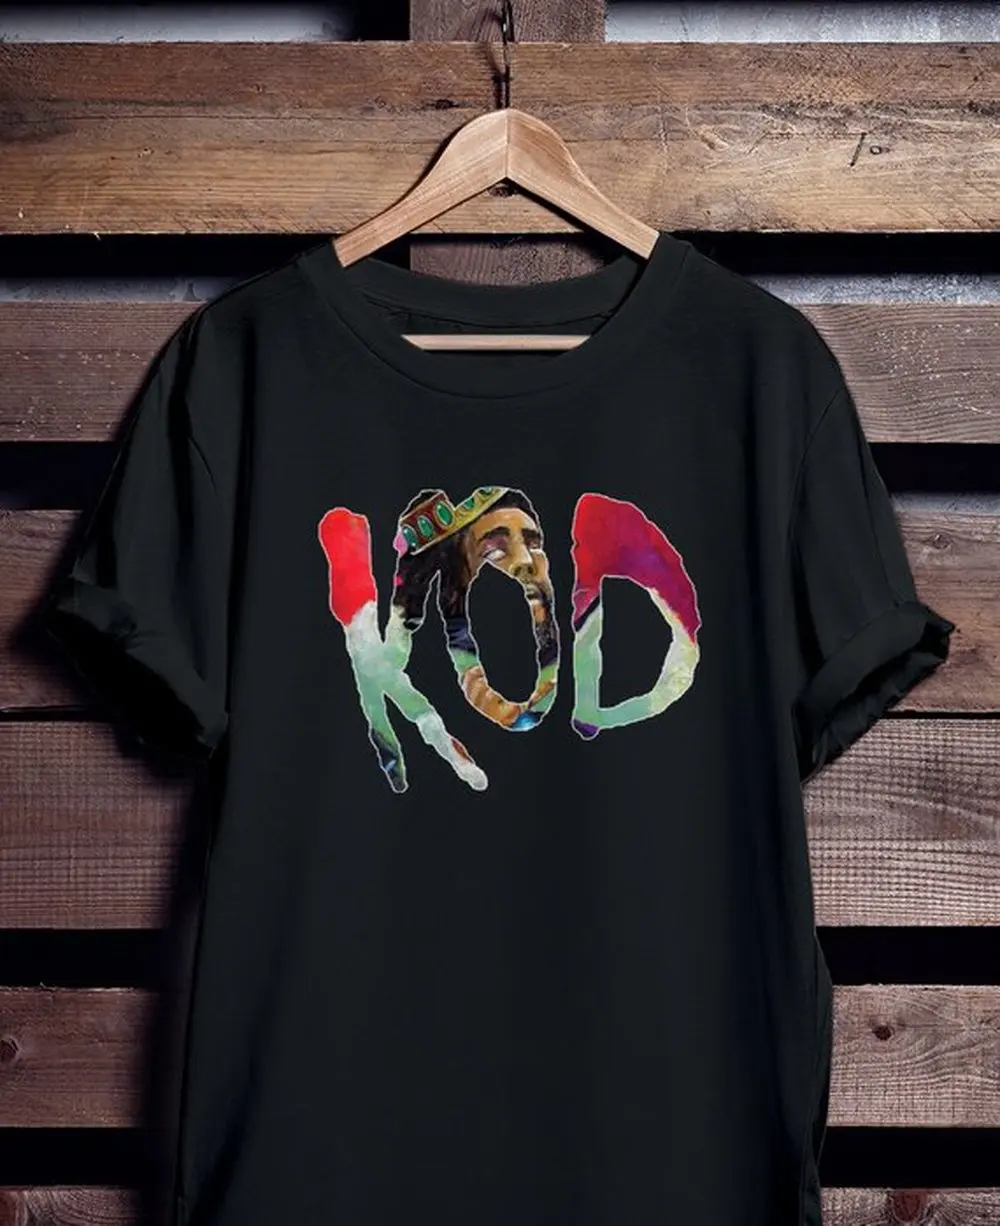 J Cole Dreamville Shirt King Cole T Shirt KOD Album Short Sleeve shirt Top Tees